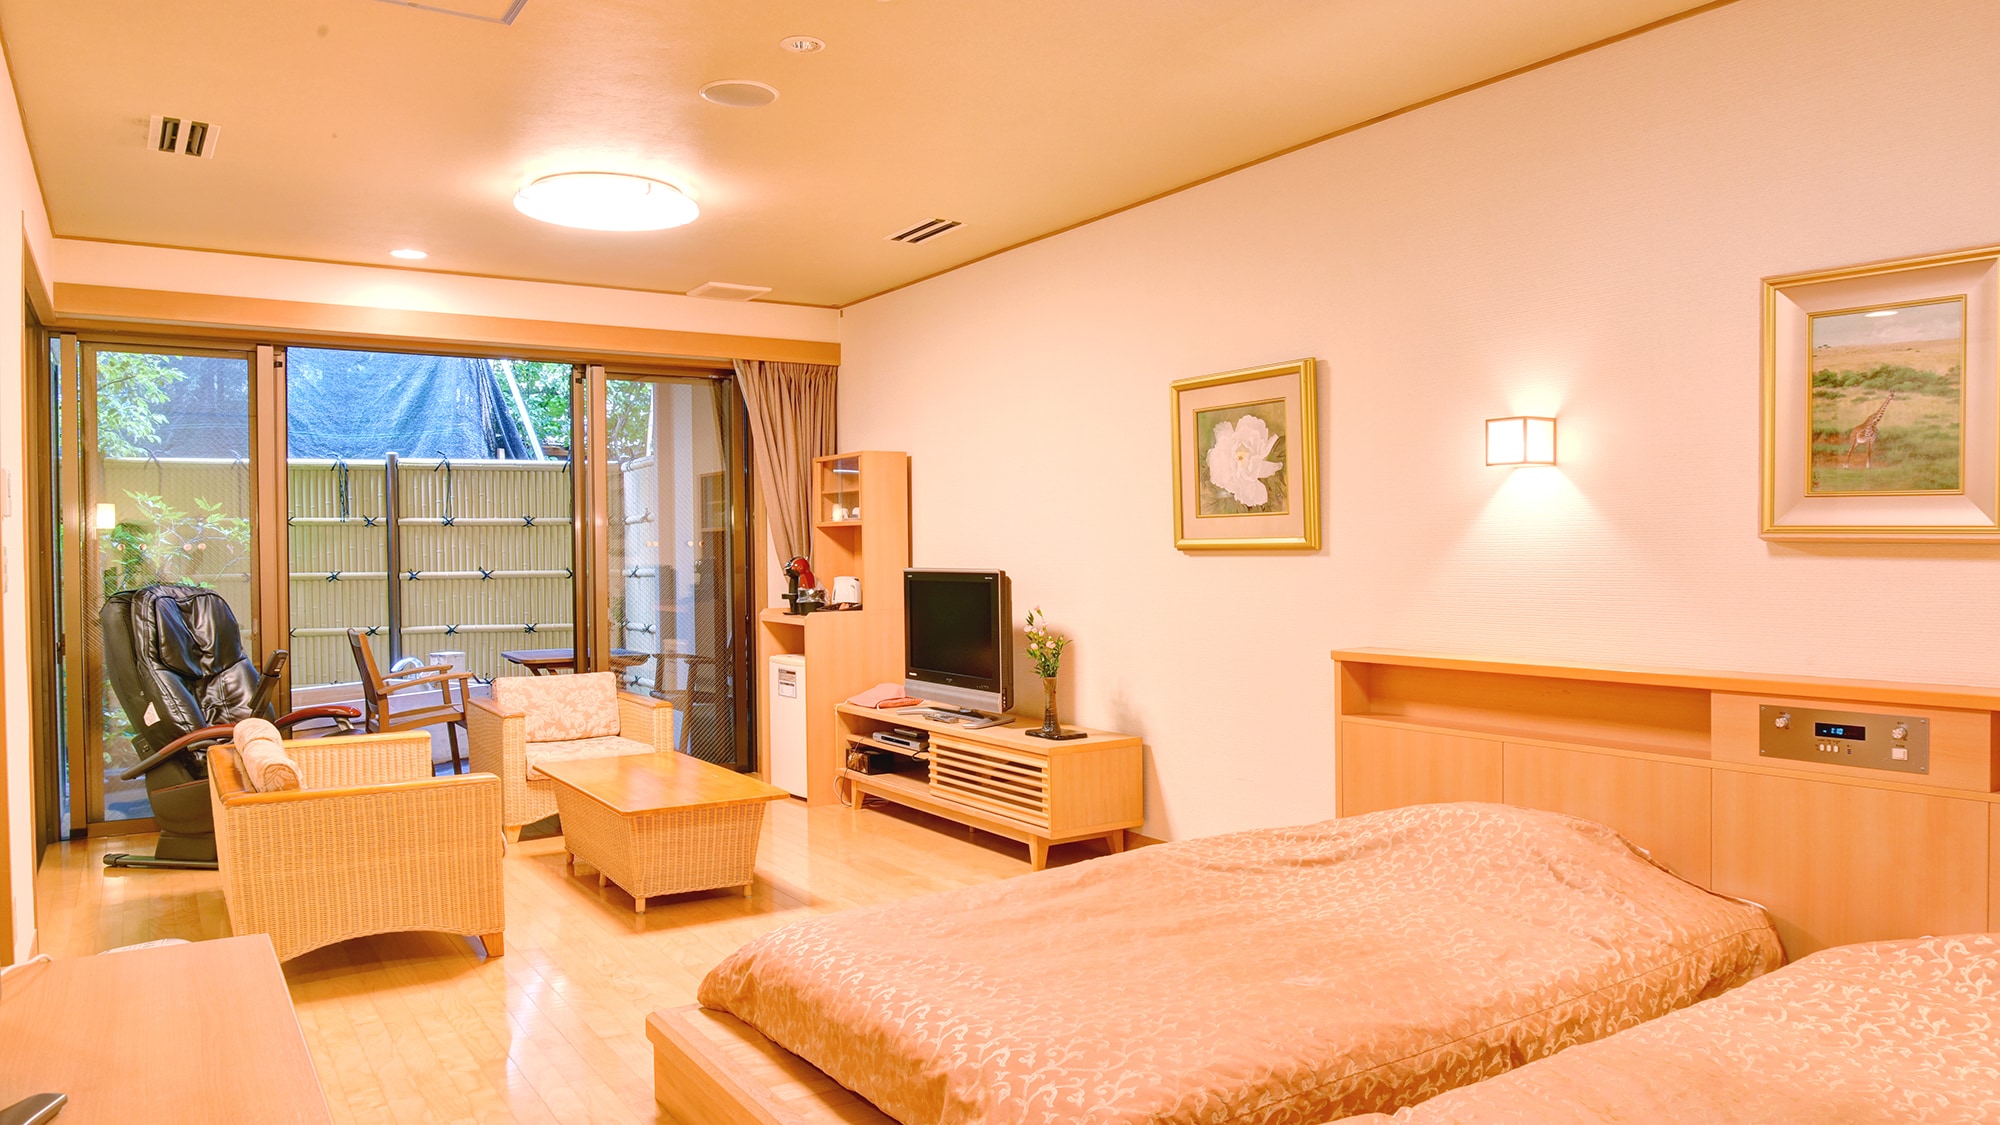 155 kamar tamu modern Jepang